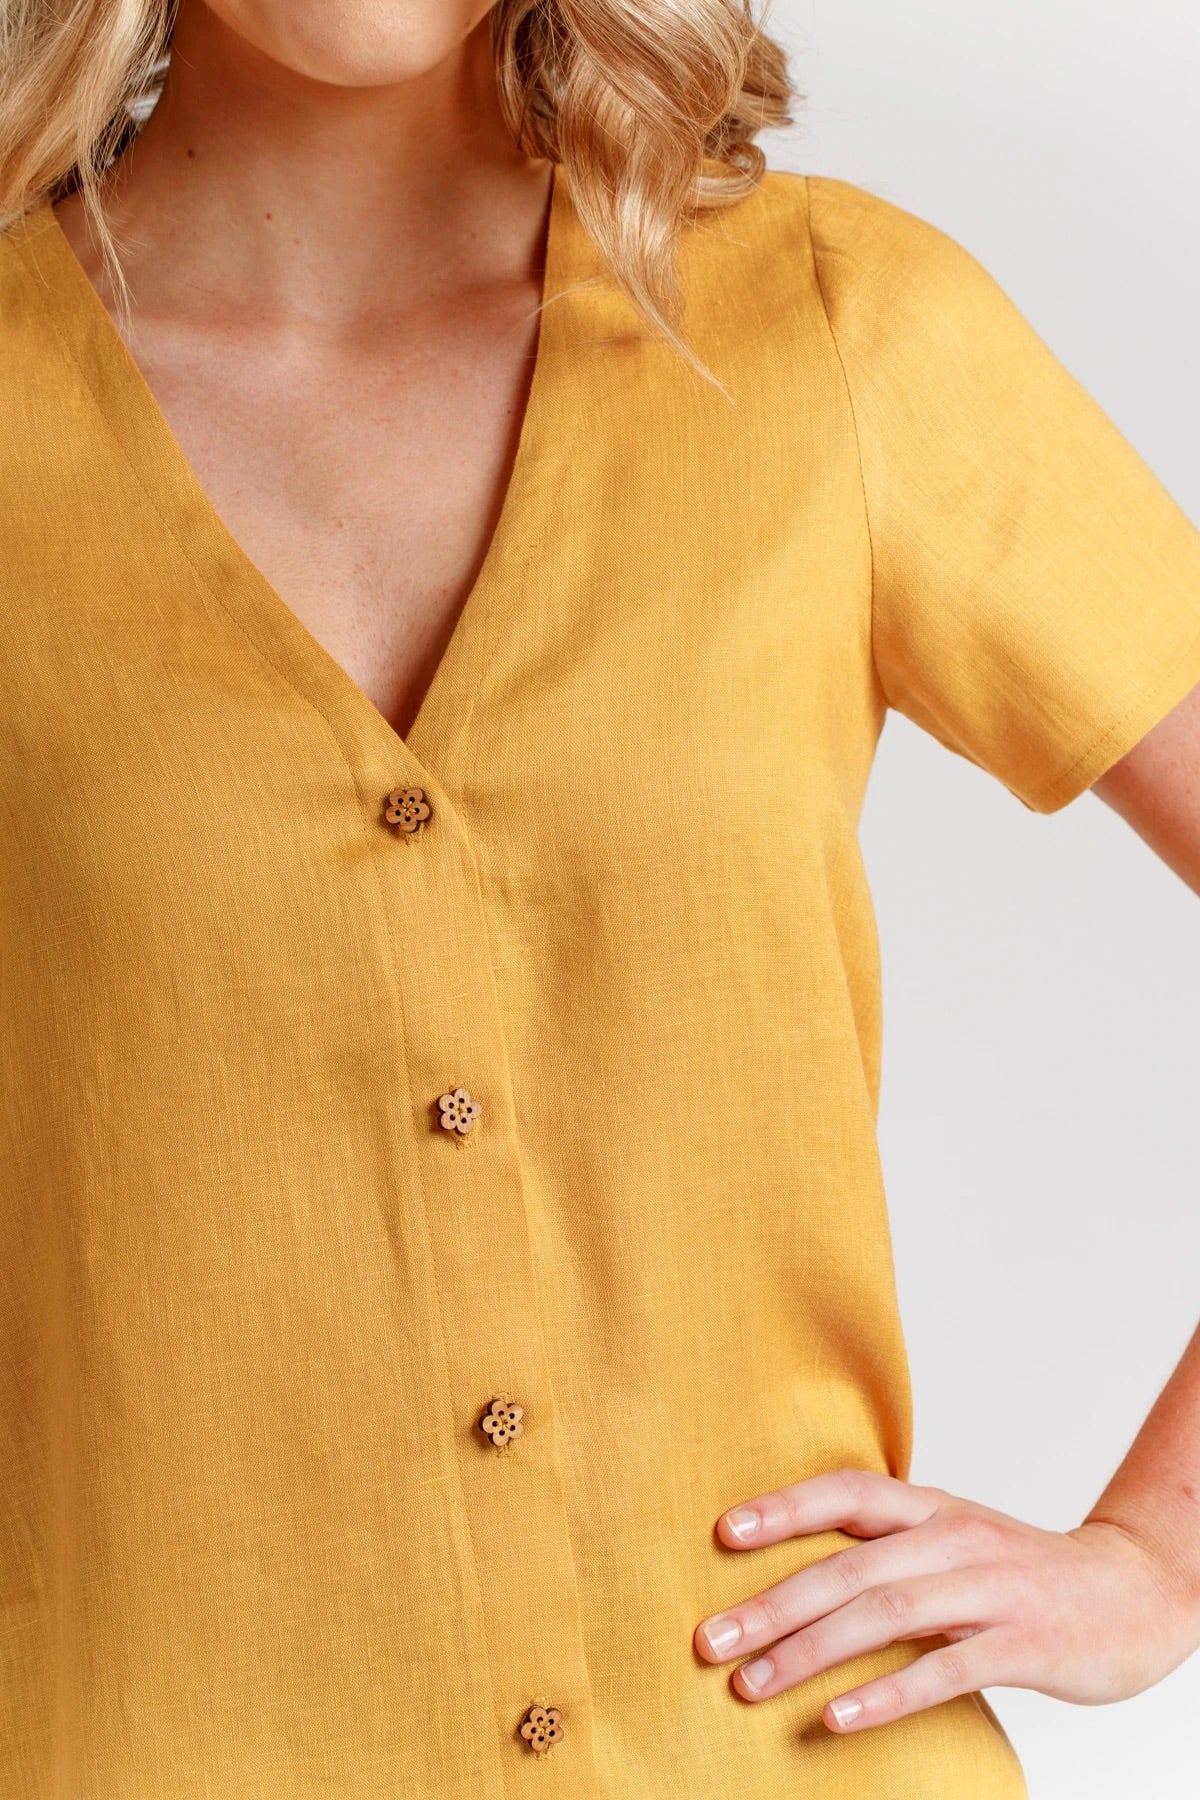 Megan Nielsen - Darling Ranges Dress & Blouse Sewing Pattern